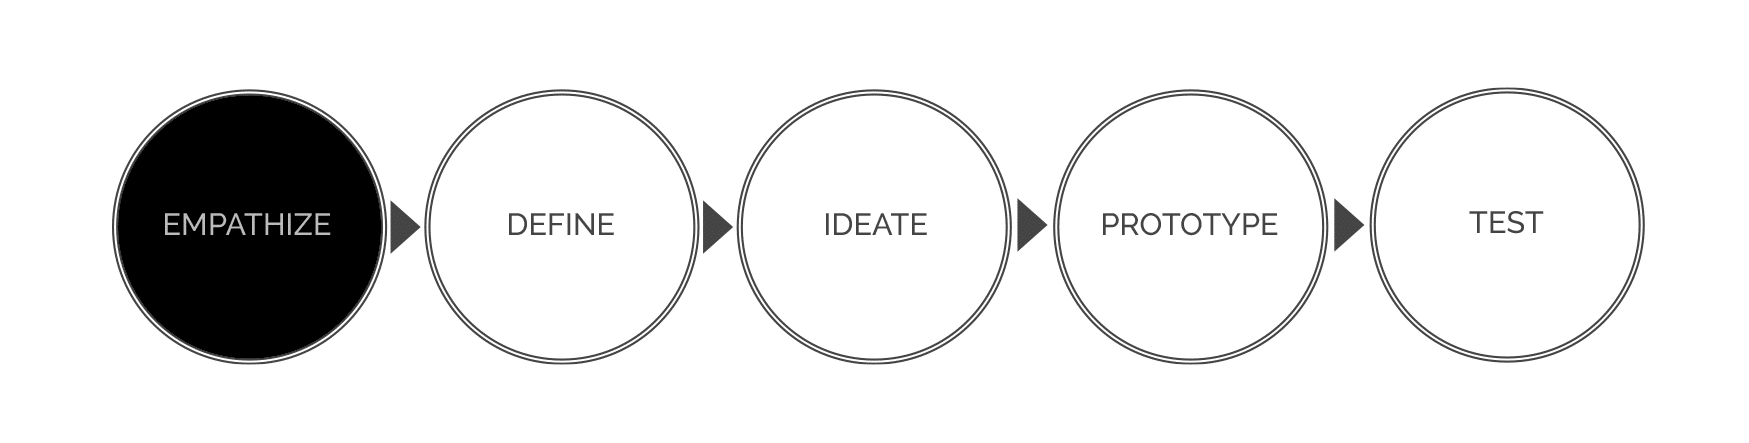 : De stappen van de design thinking methode: EMPATHIZE, define, ideate, prototype en test